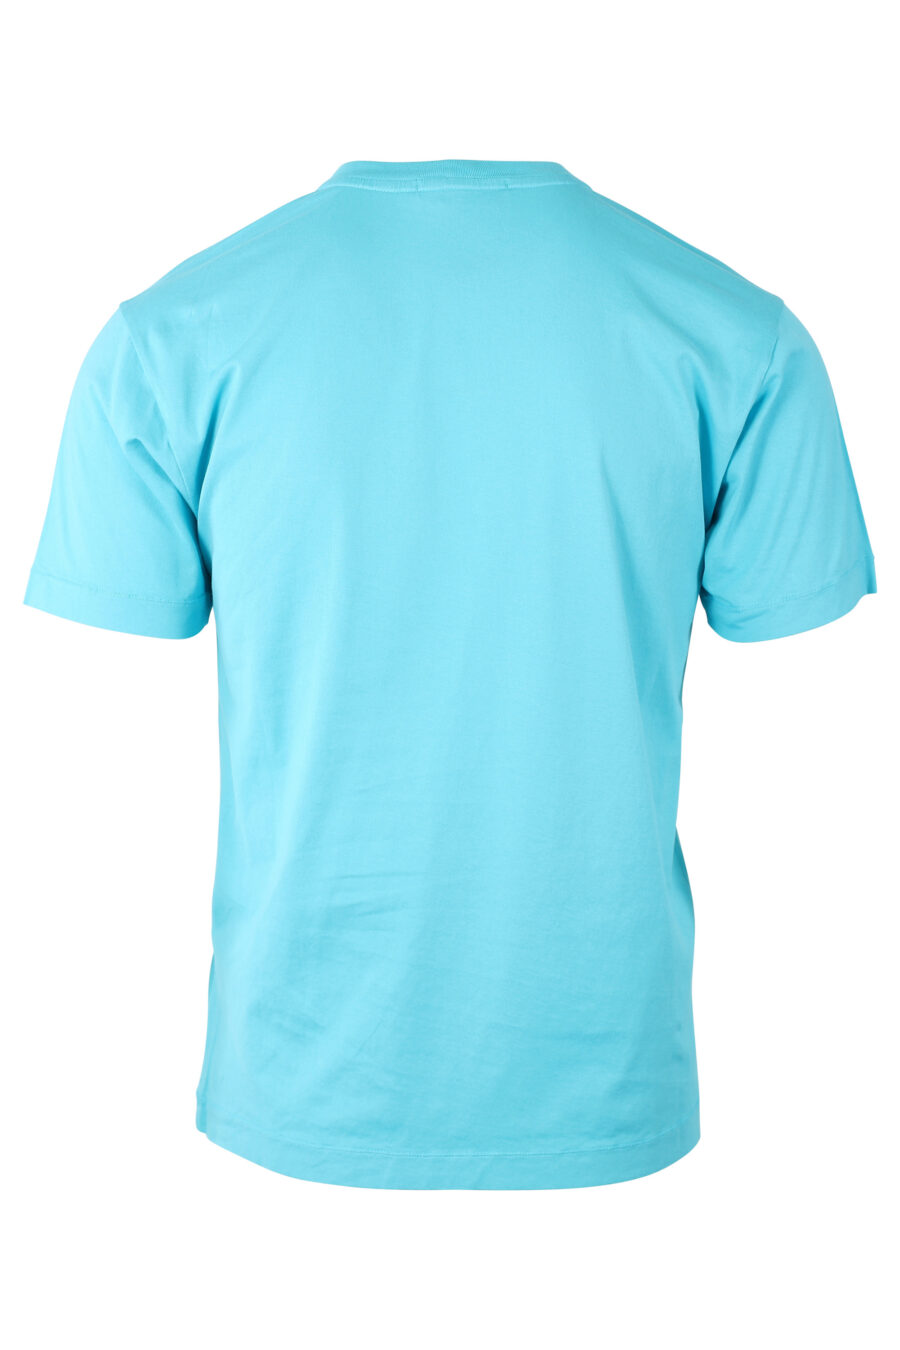 T-shirt turquoise avec mini patch logo noir - IMG 1171